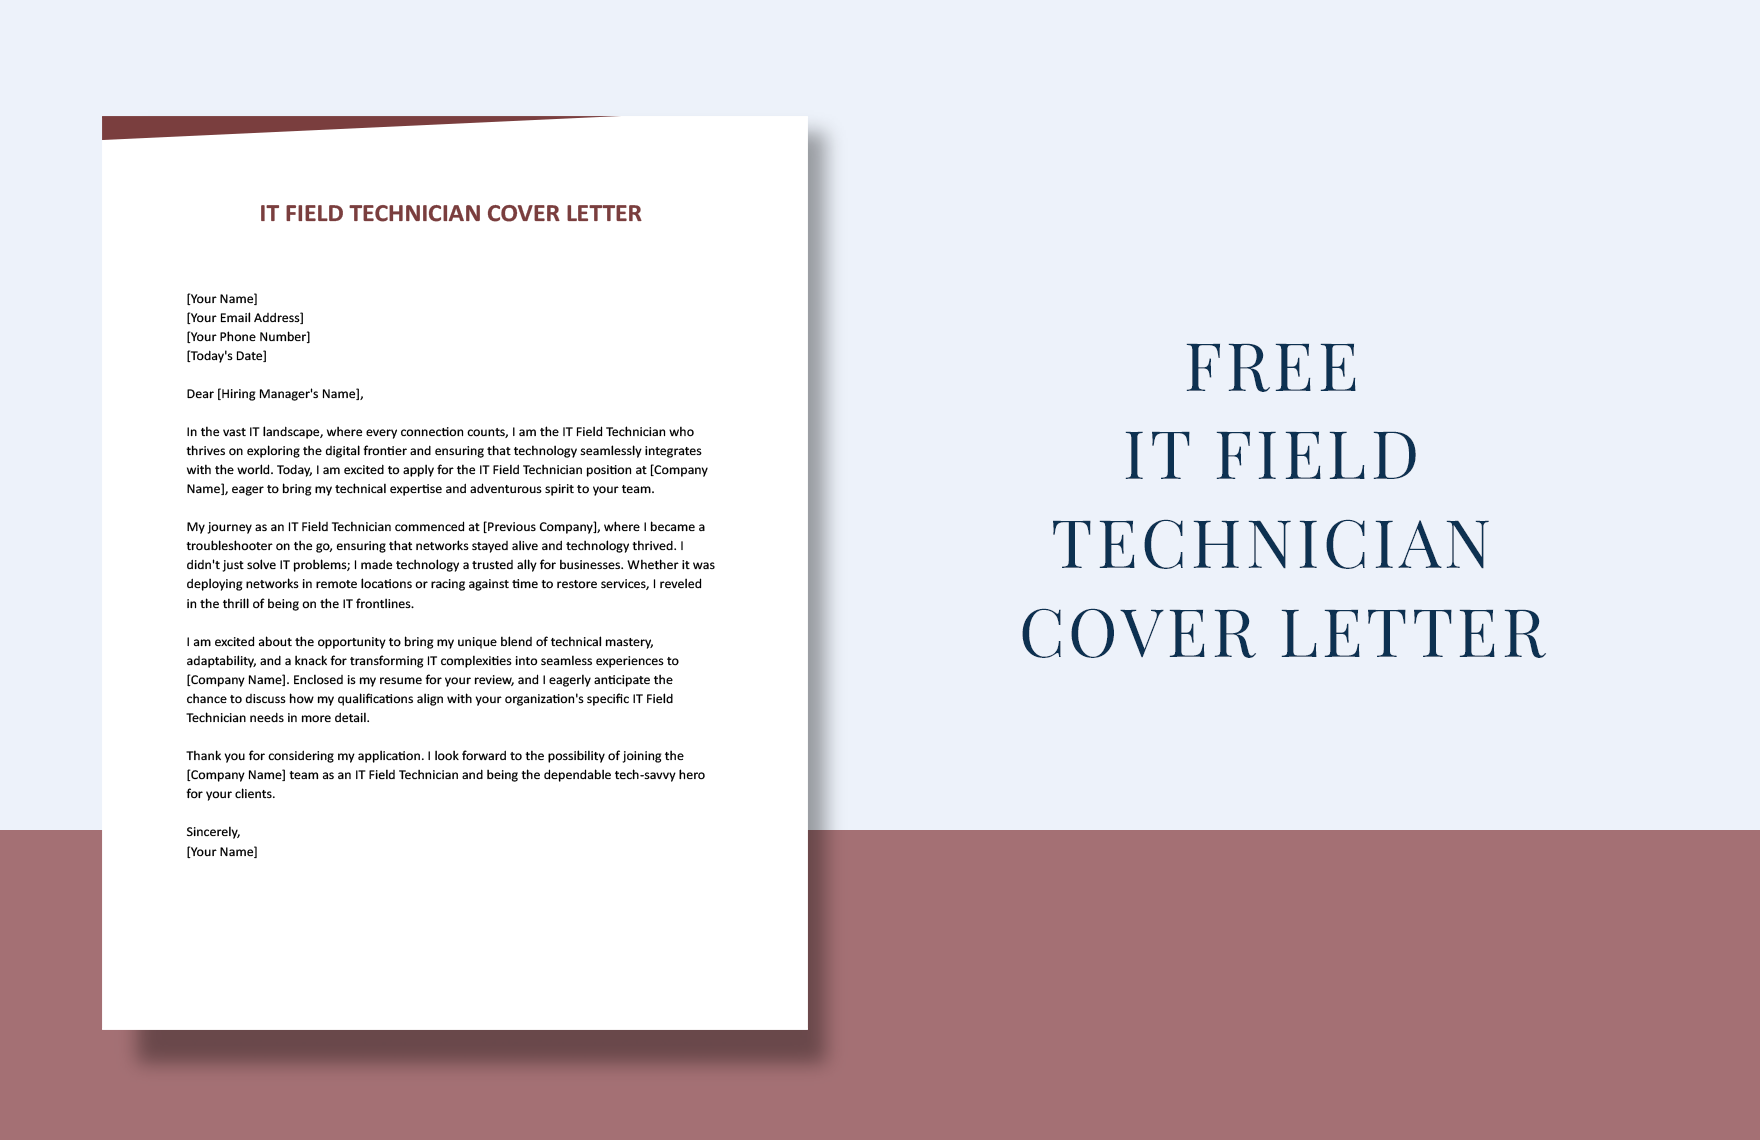 IT Field Technician Cover Letter in Word, Google Docs - Download ...